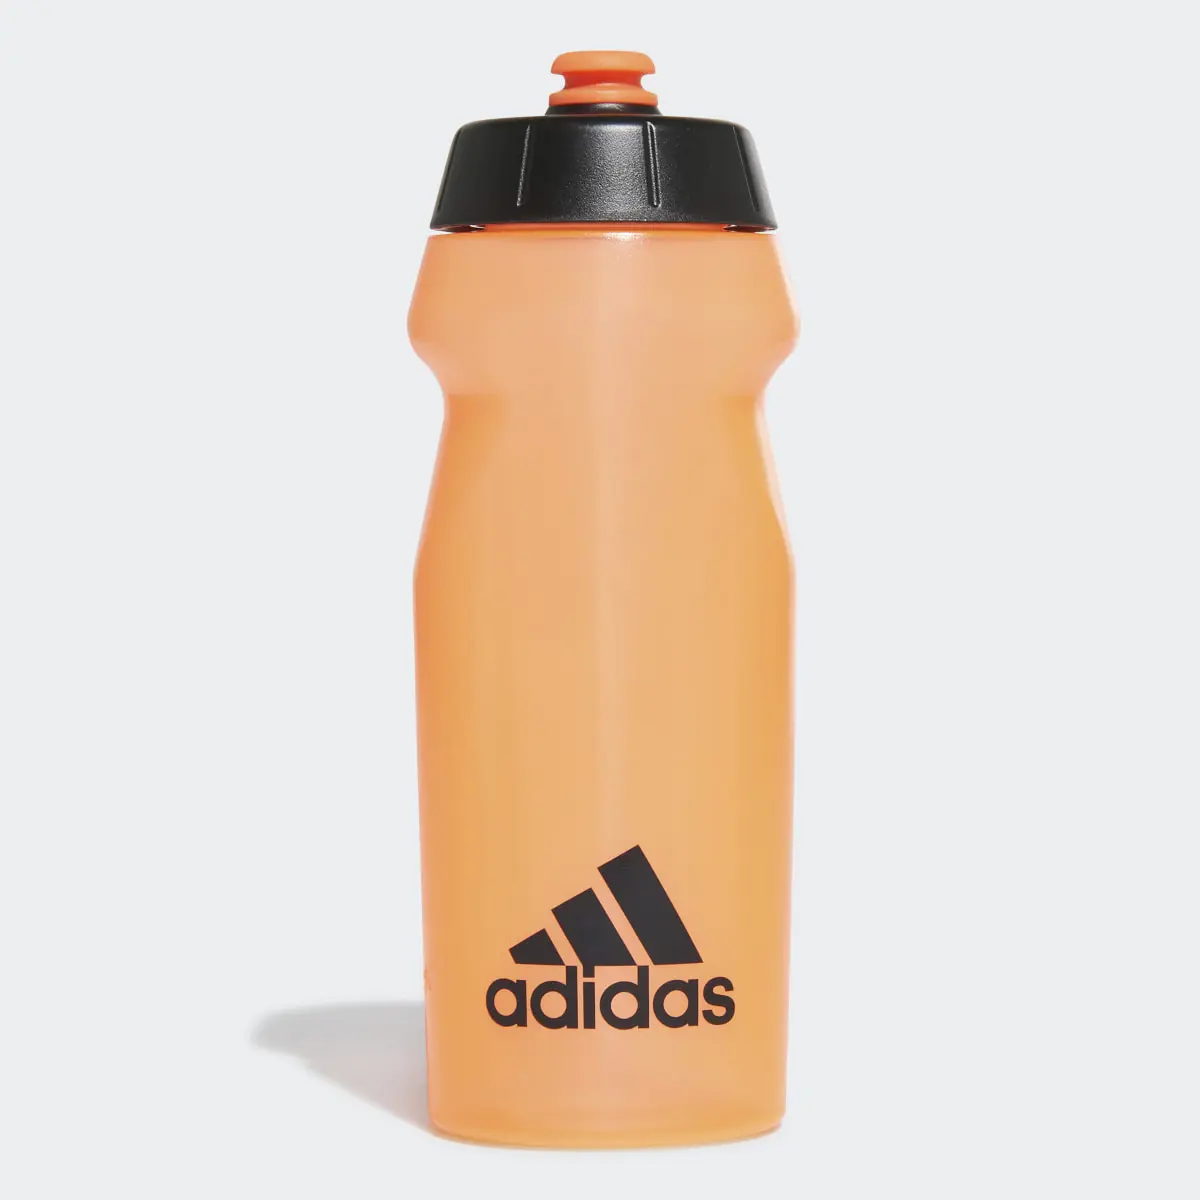 Adidas Performance Bottle .5 L. 2